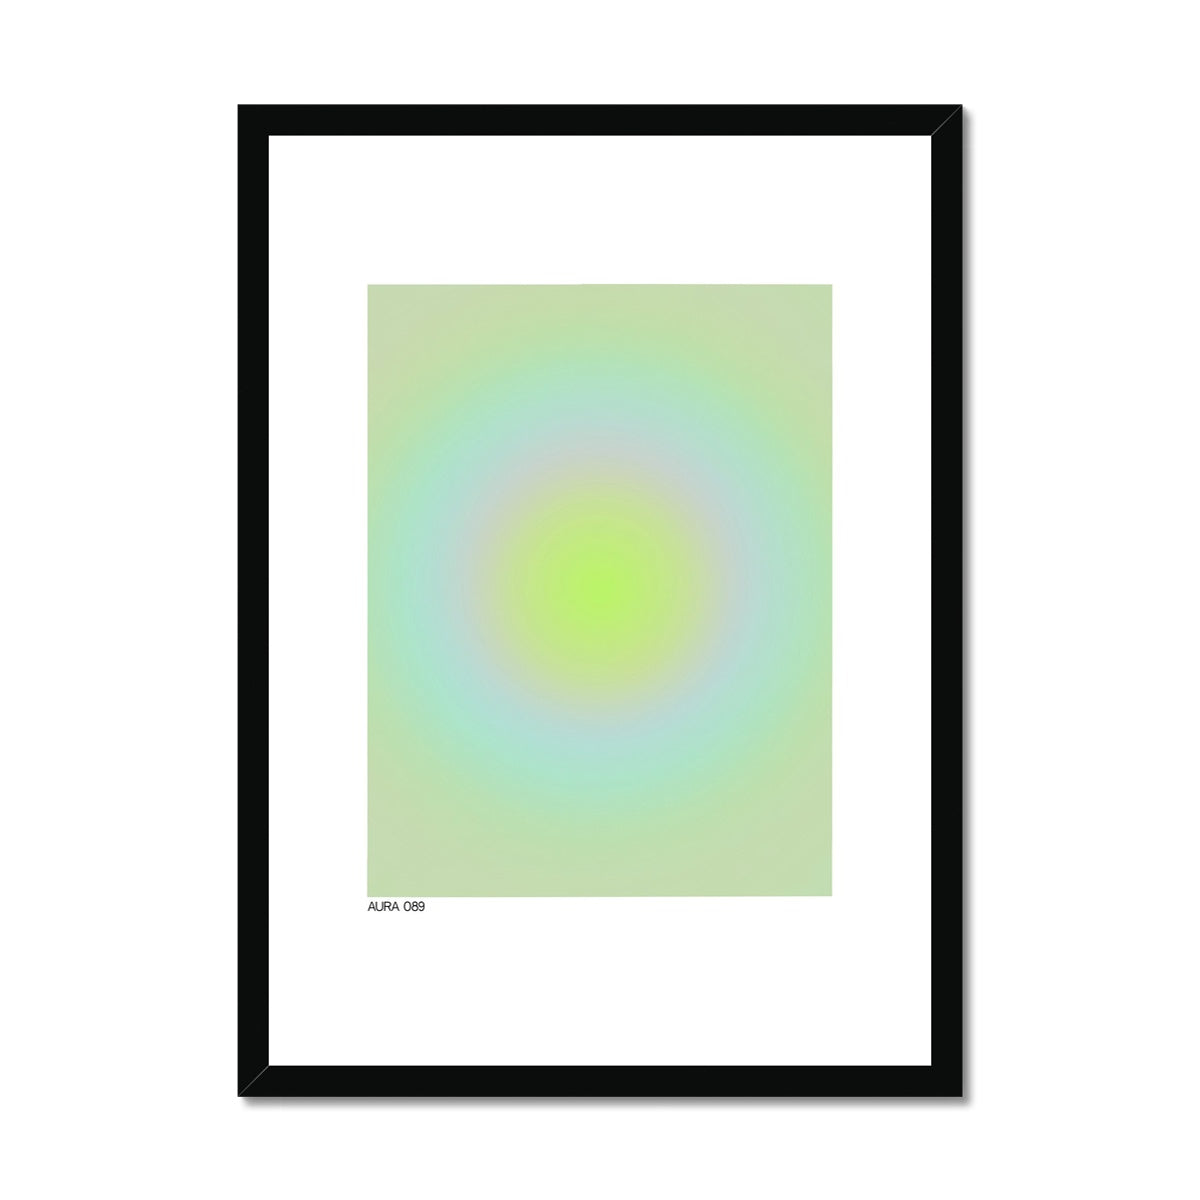 aura 089 Framed & Mounted Print